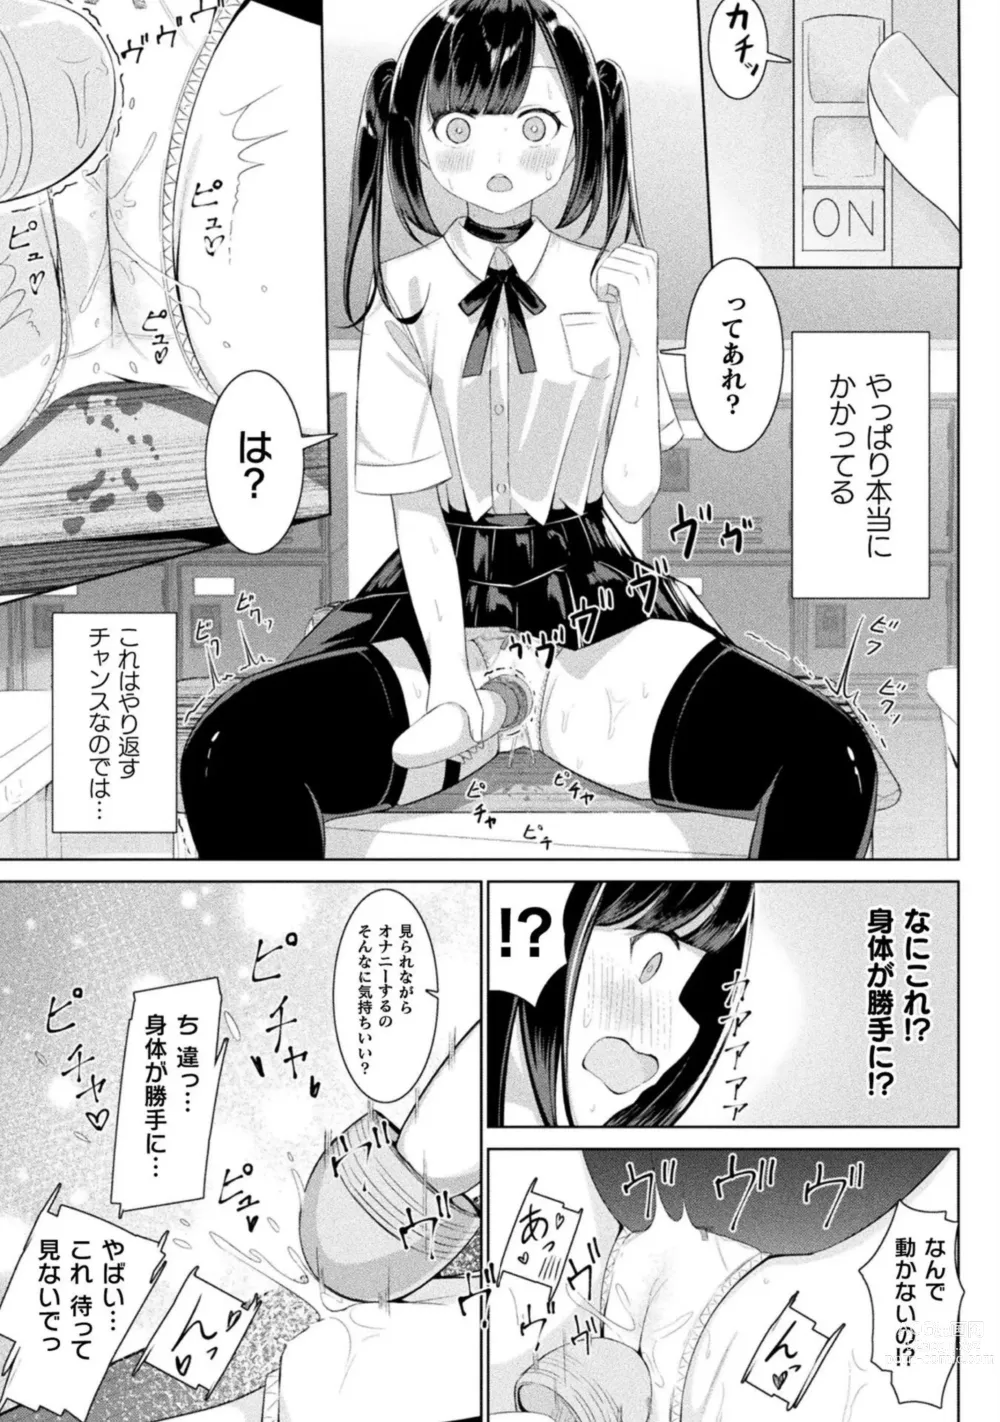 Page 69 of manga Bessatsu Comic Unreal Wakarase Yuri Hen Vol. 2